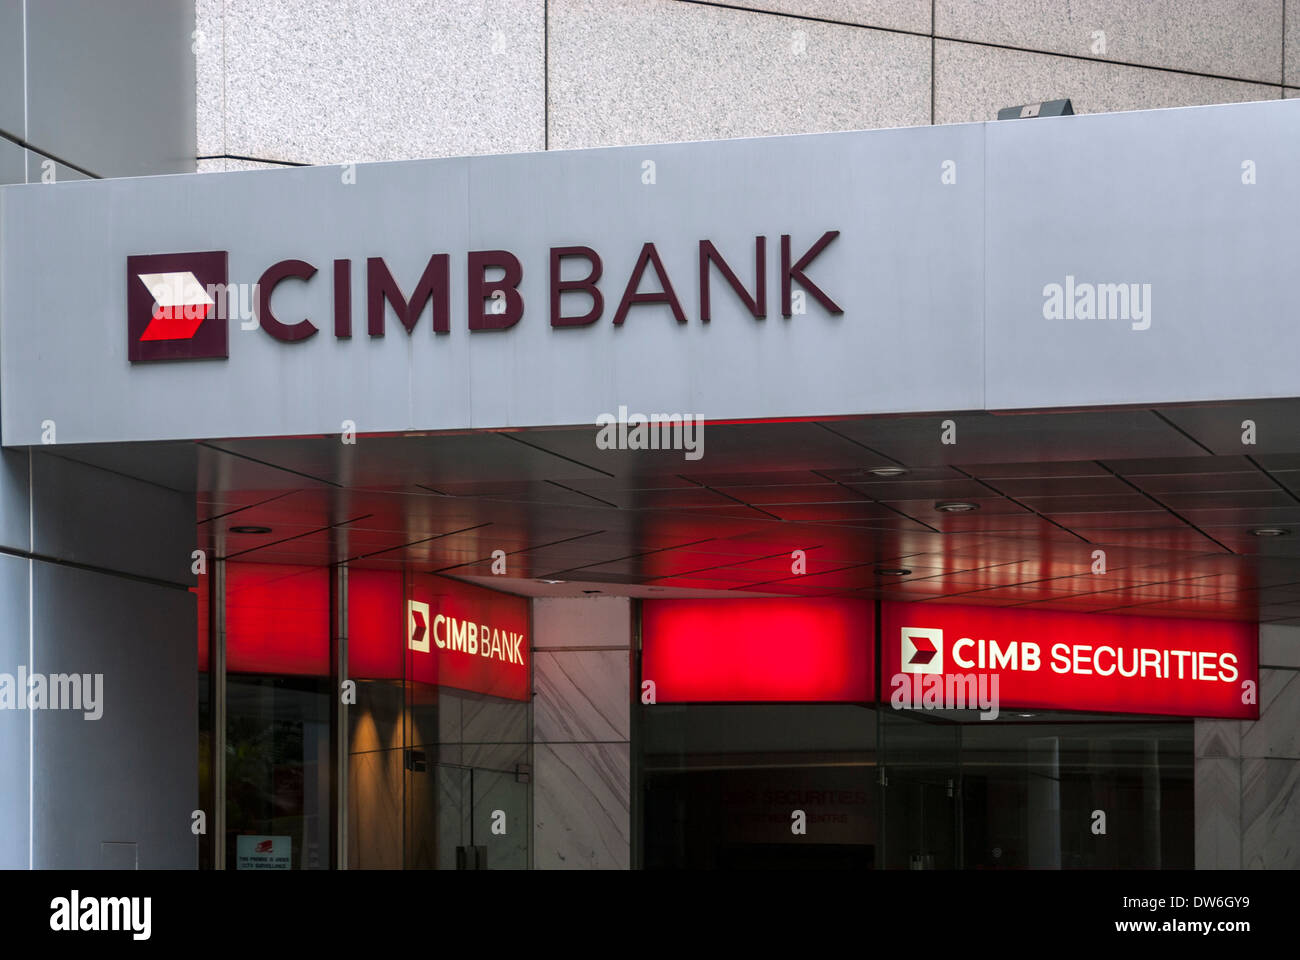 Cimb bank opening hours